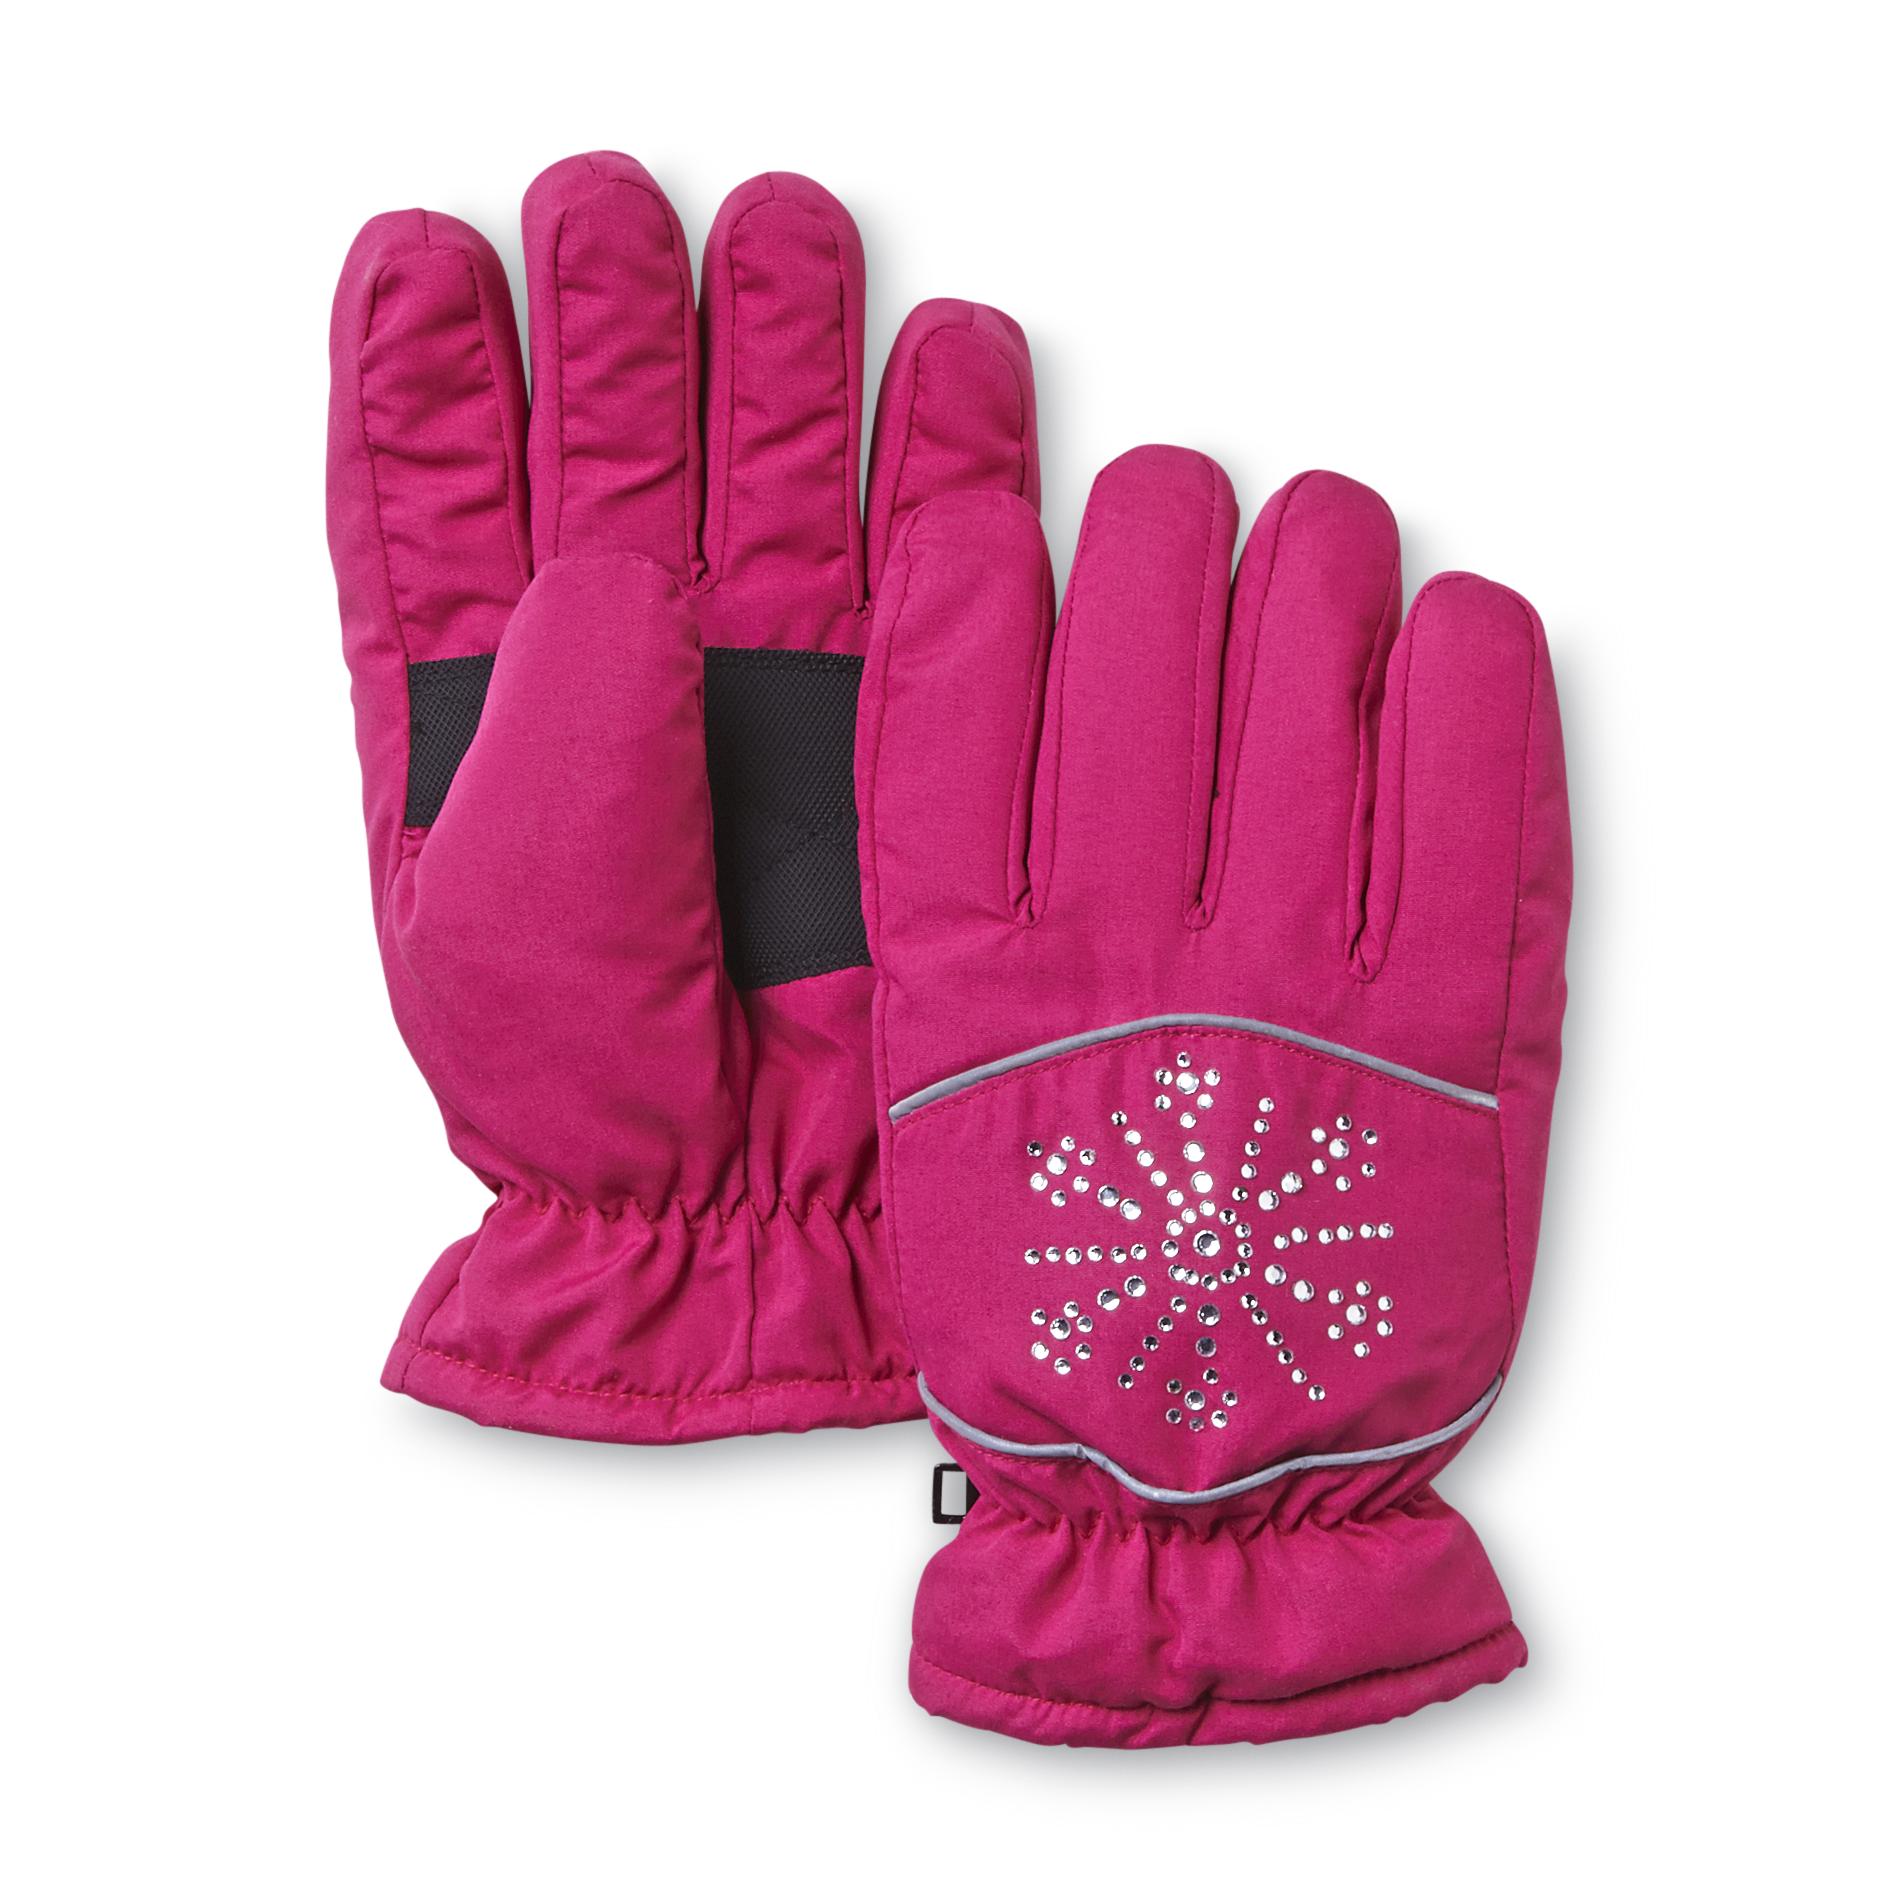 Joe Boxer Women's Thinsulate Ski Gloves